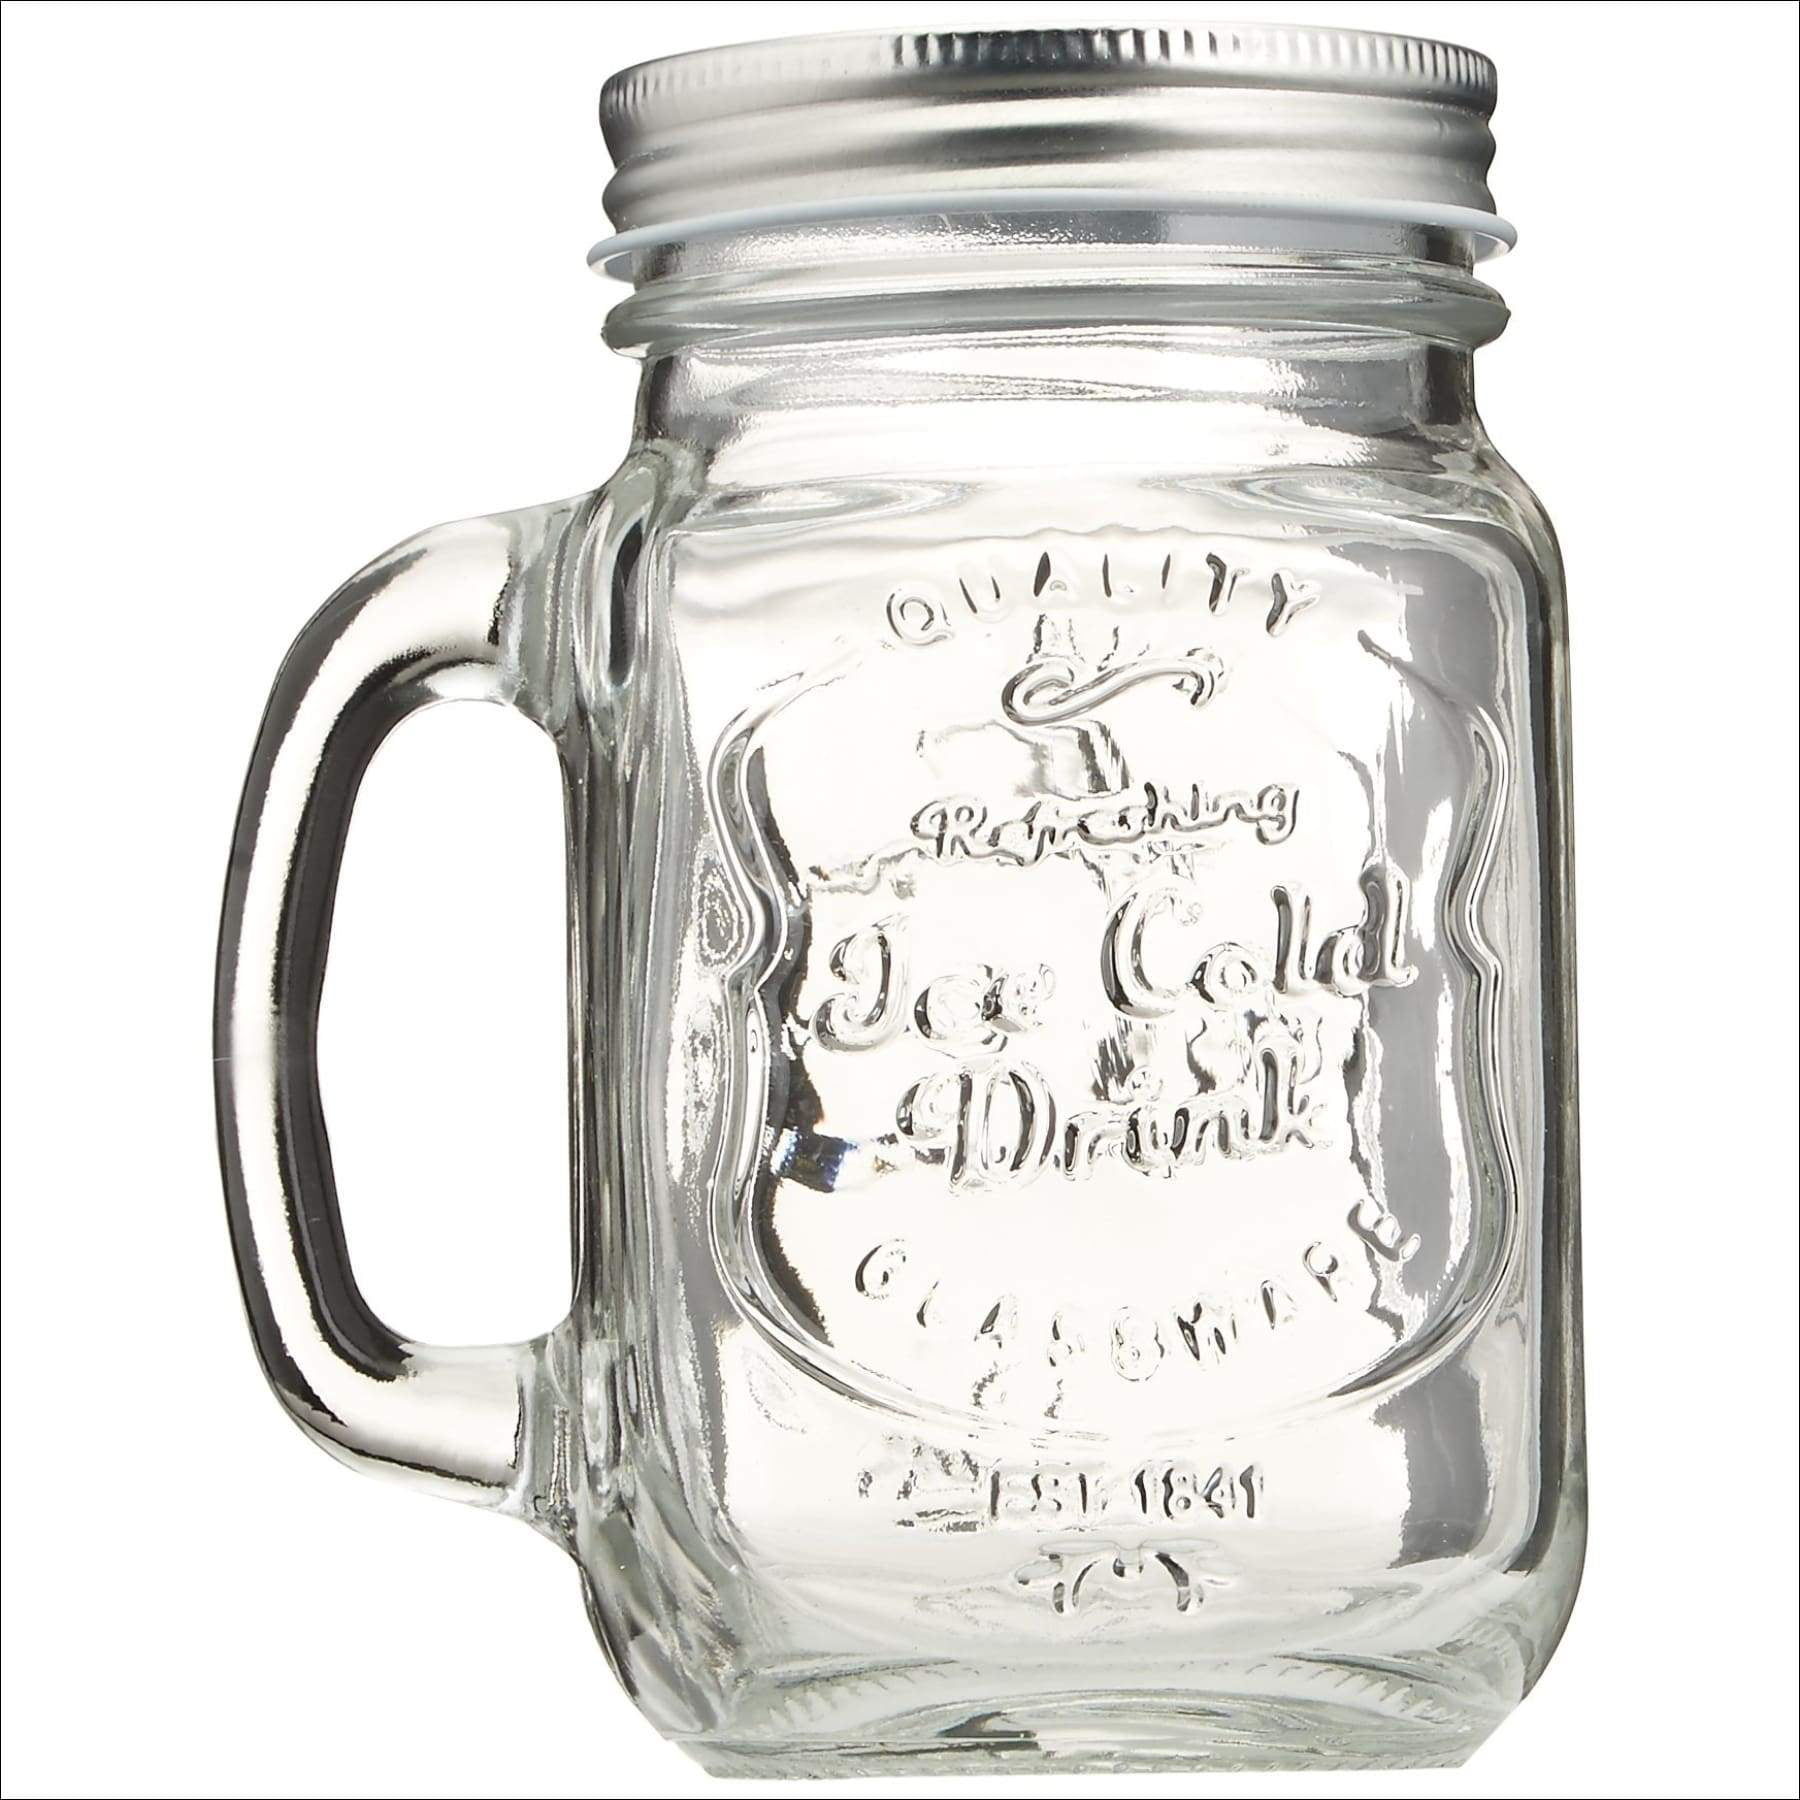 Exclusive Edition Estilo Mason Jar Mugs with Handles Old Fashioned Drinking Glass Set 6 16 oz Each 